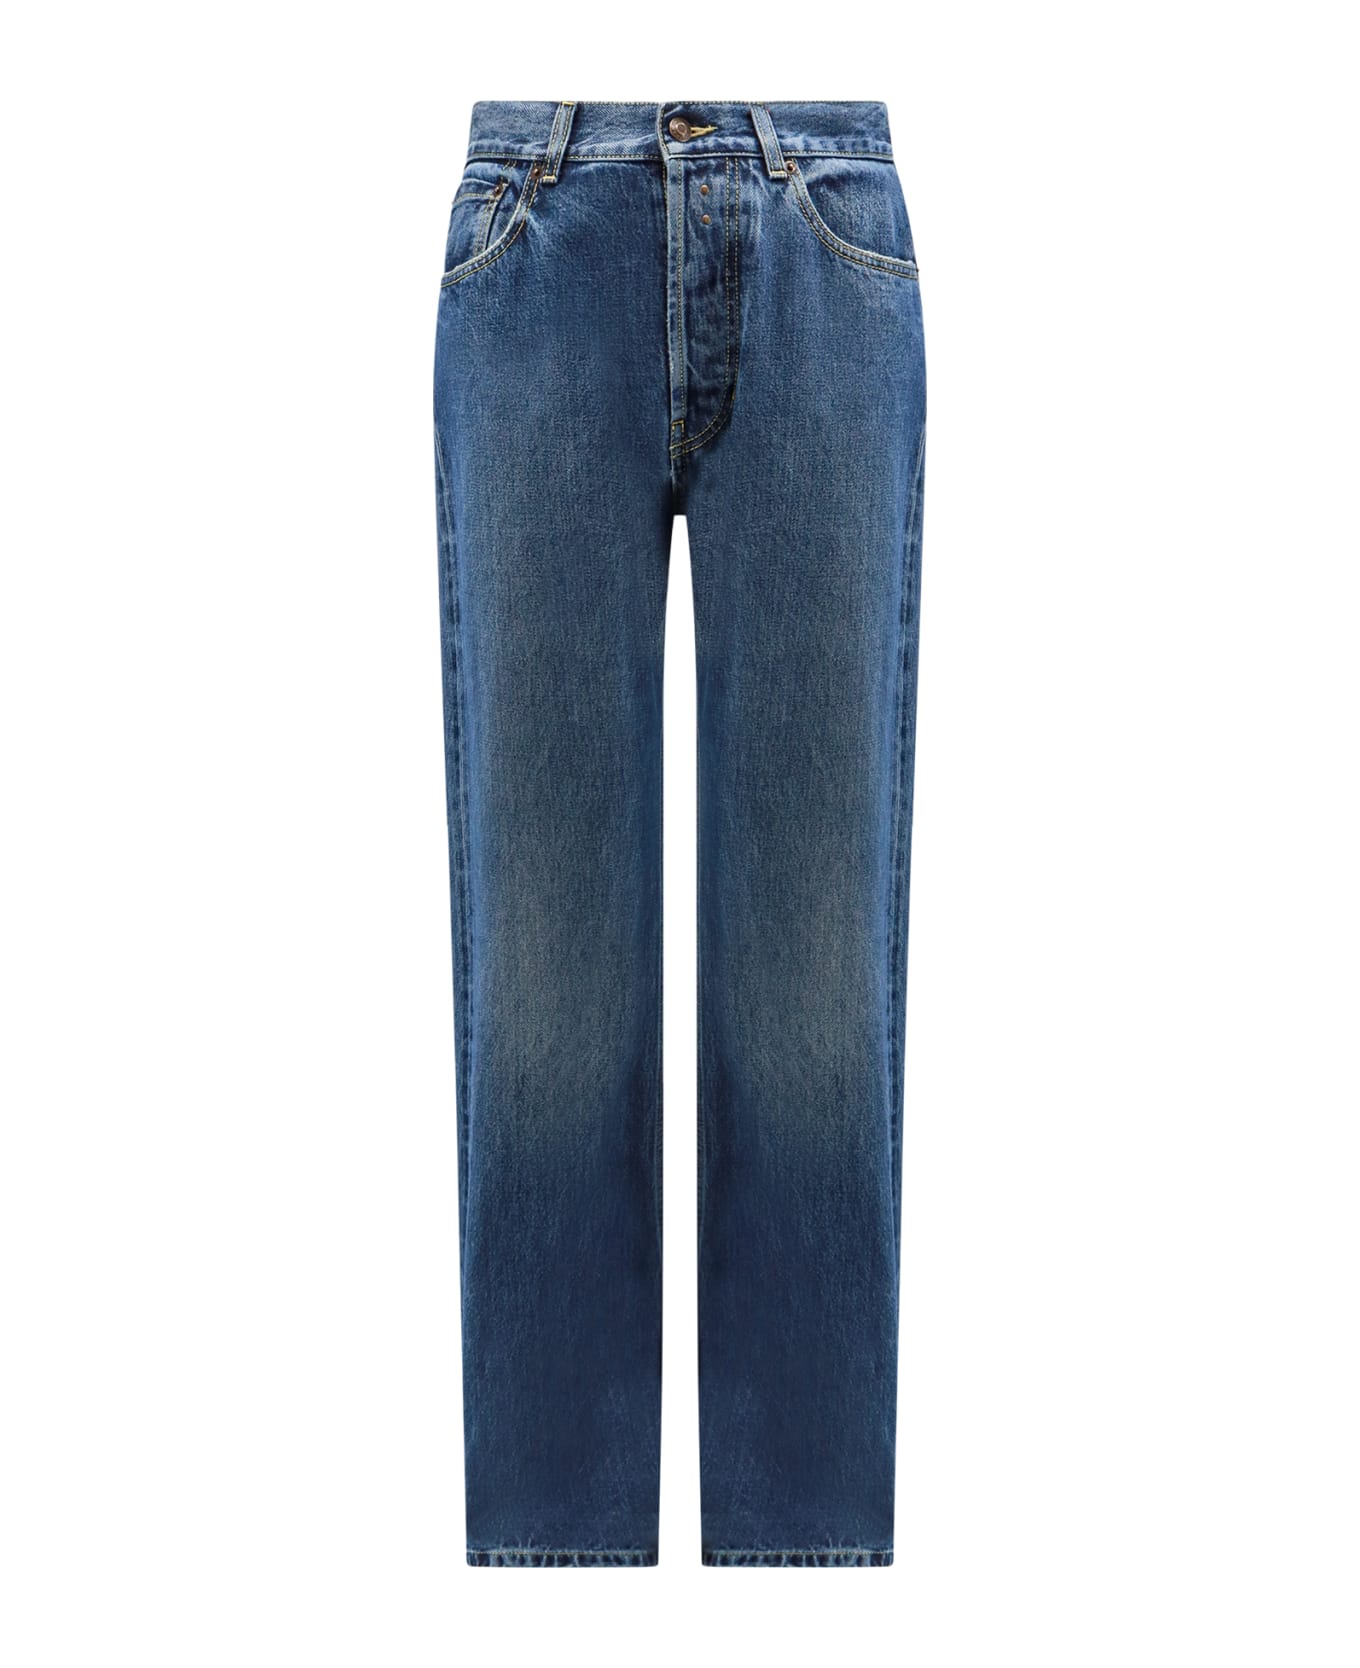 Alexander McQueen Cuffed Hems Jeans - Blue Washed